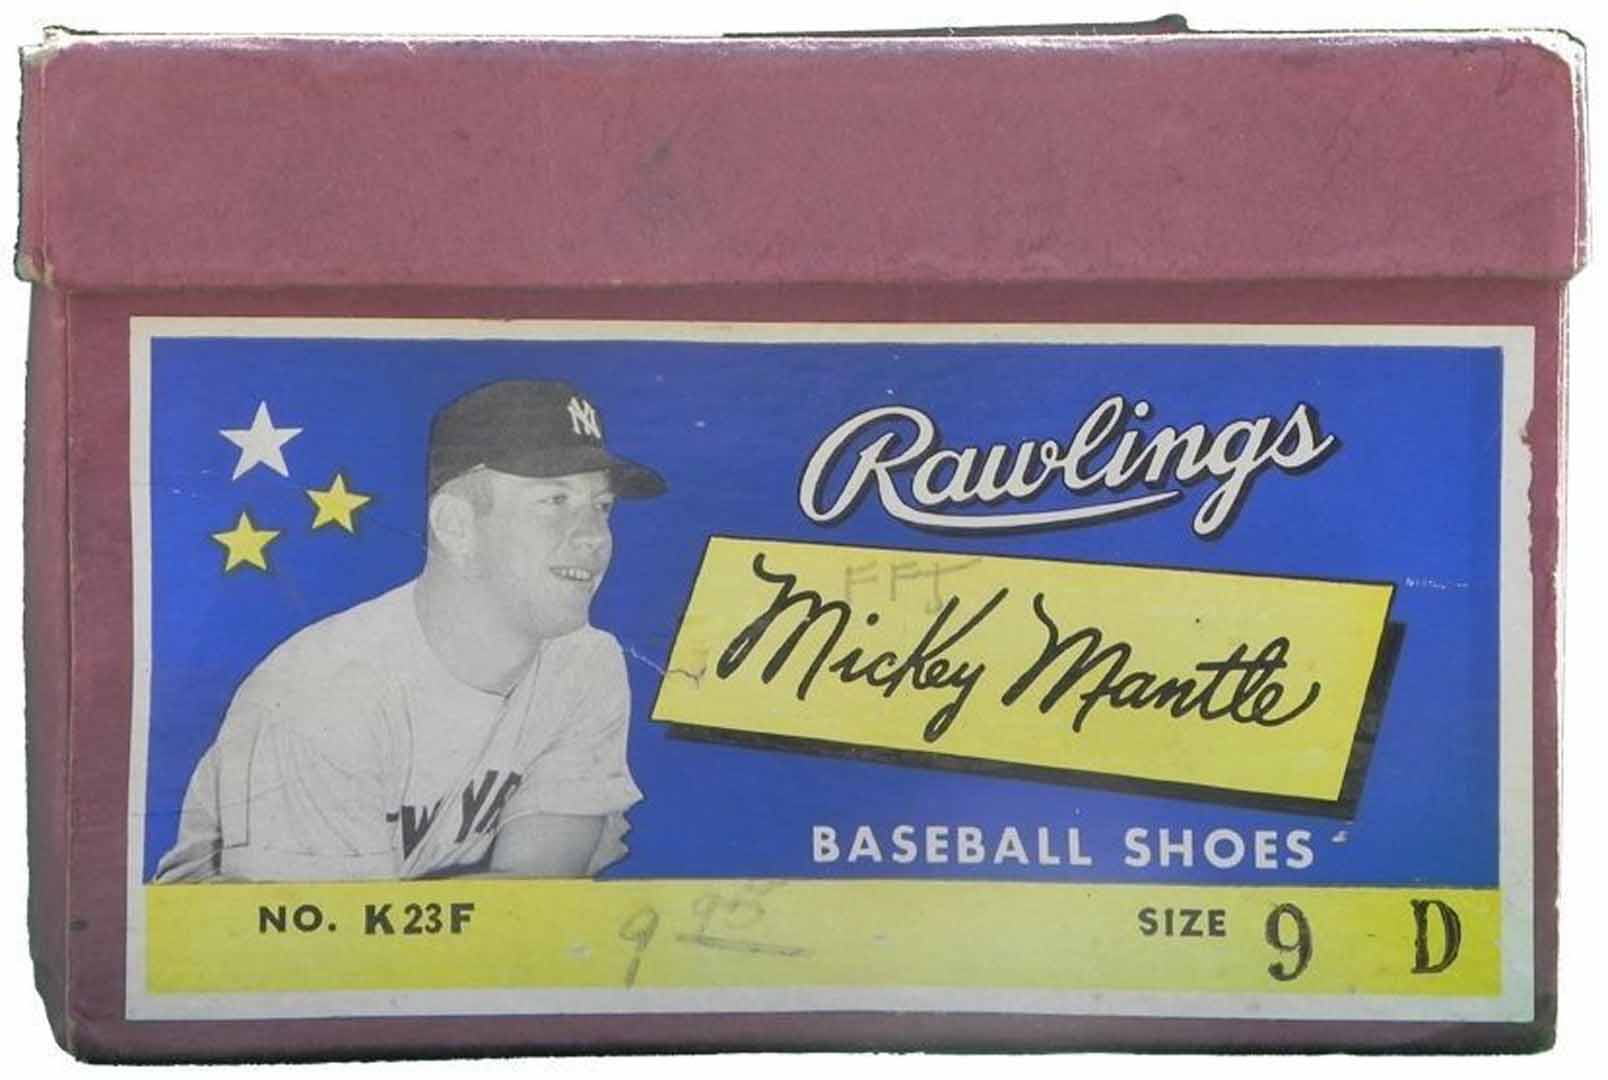 1954-1957 rawlings shoe box